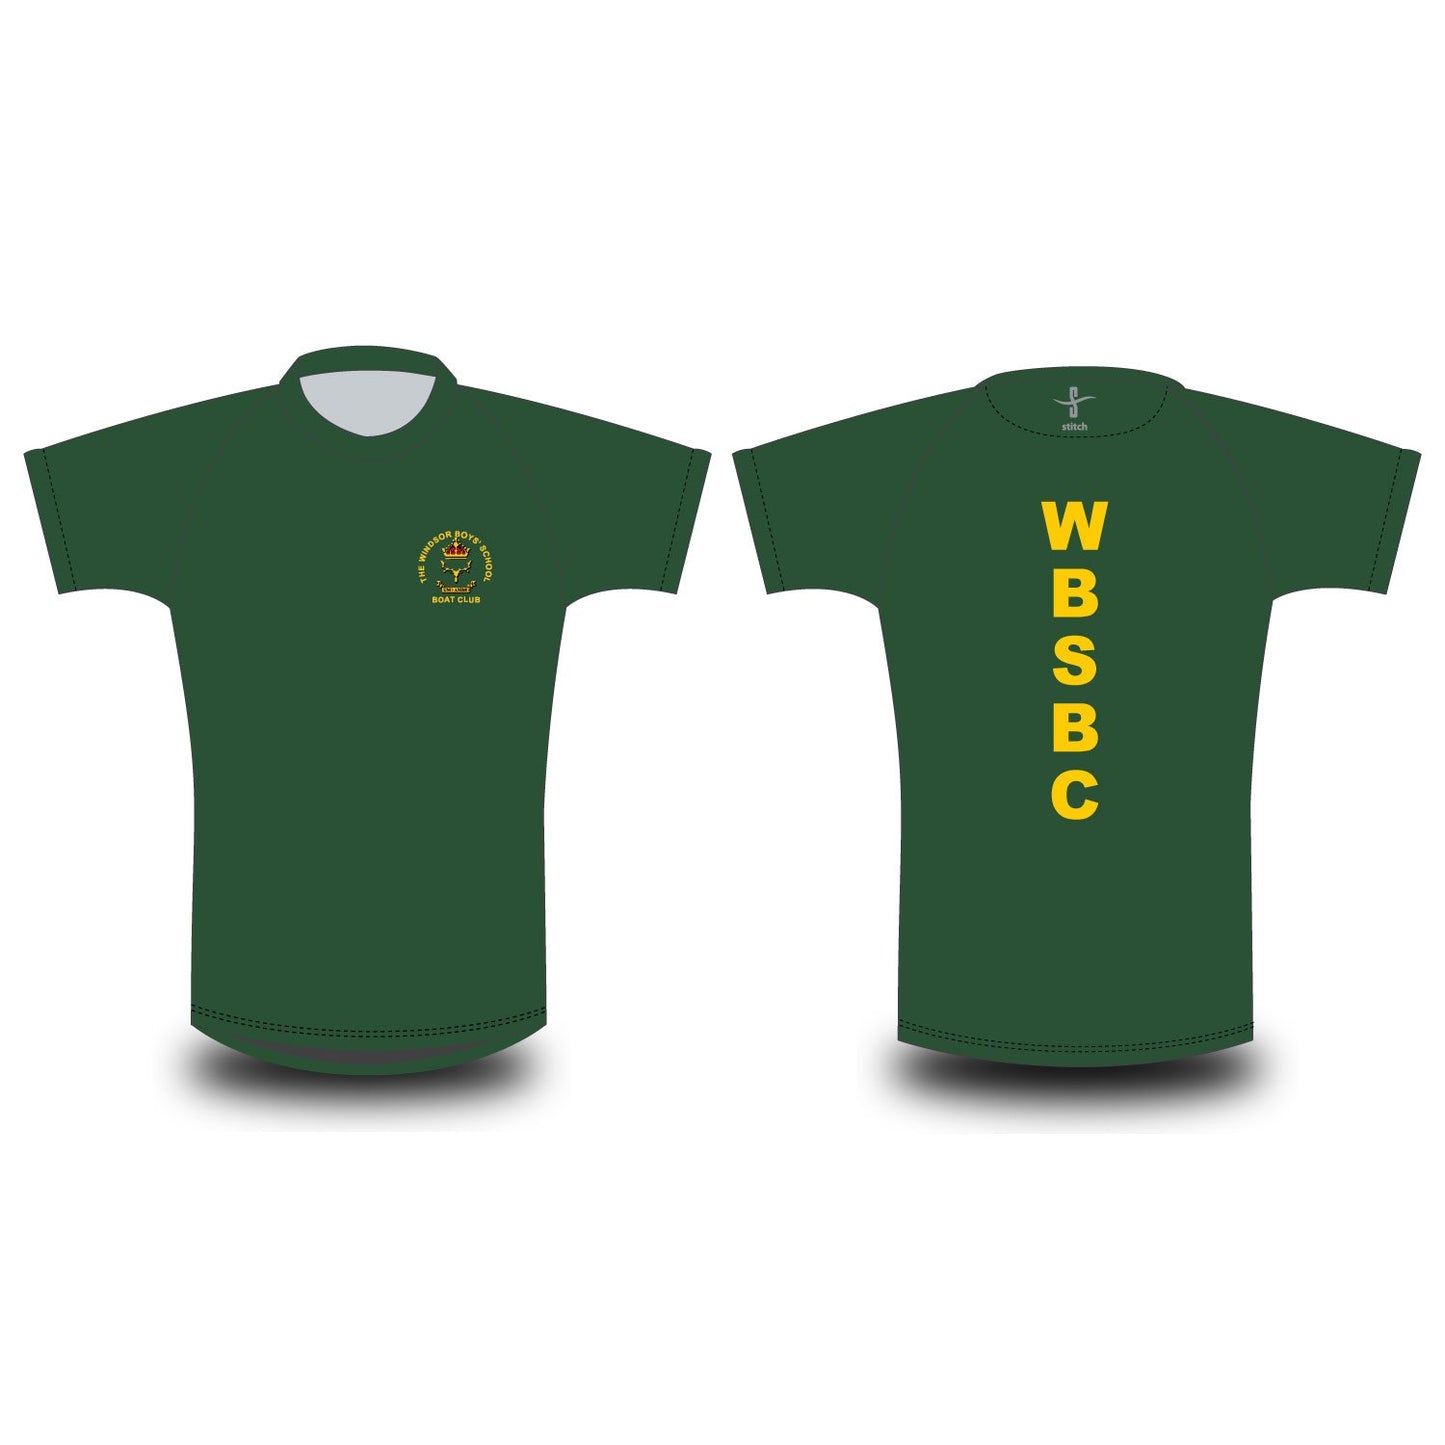 Windsor Boys School Green T-shirt